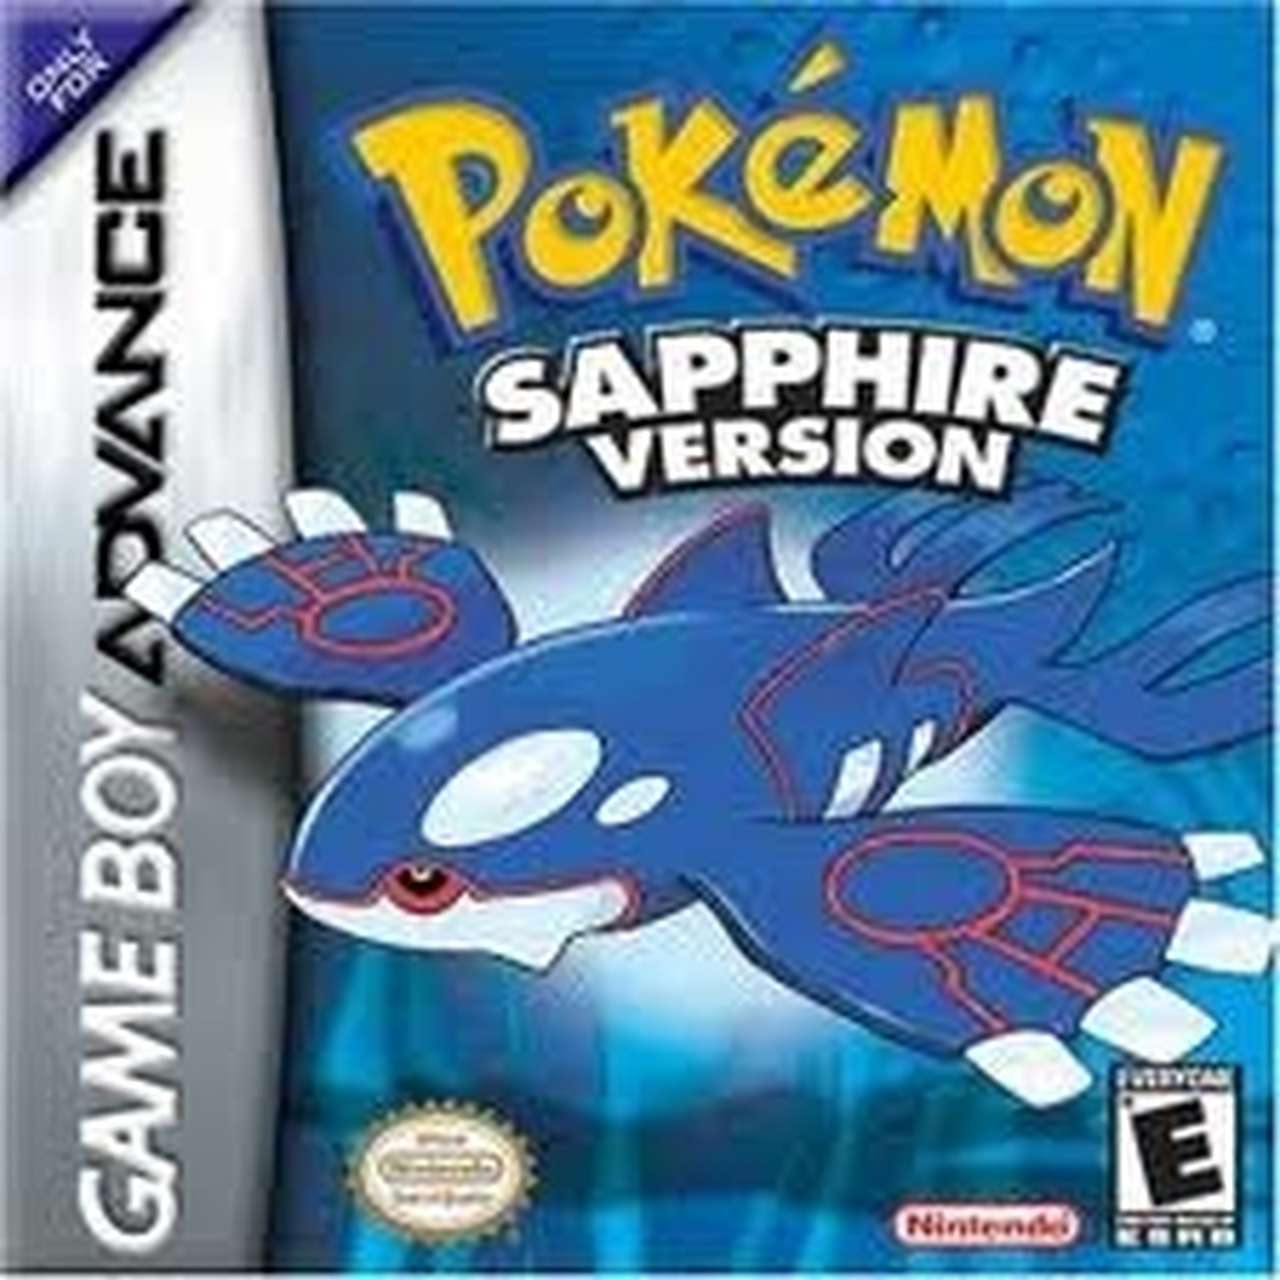 Pokemon Sapphire Version GameBoy Advance Game For Sale